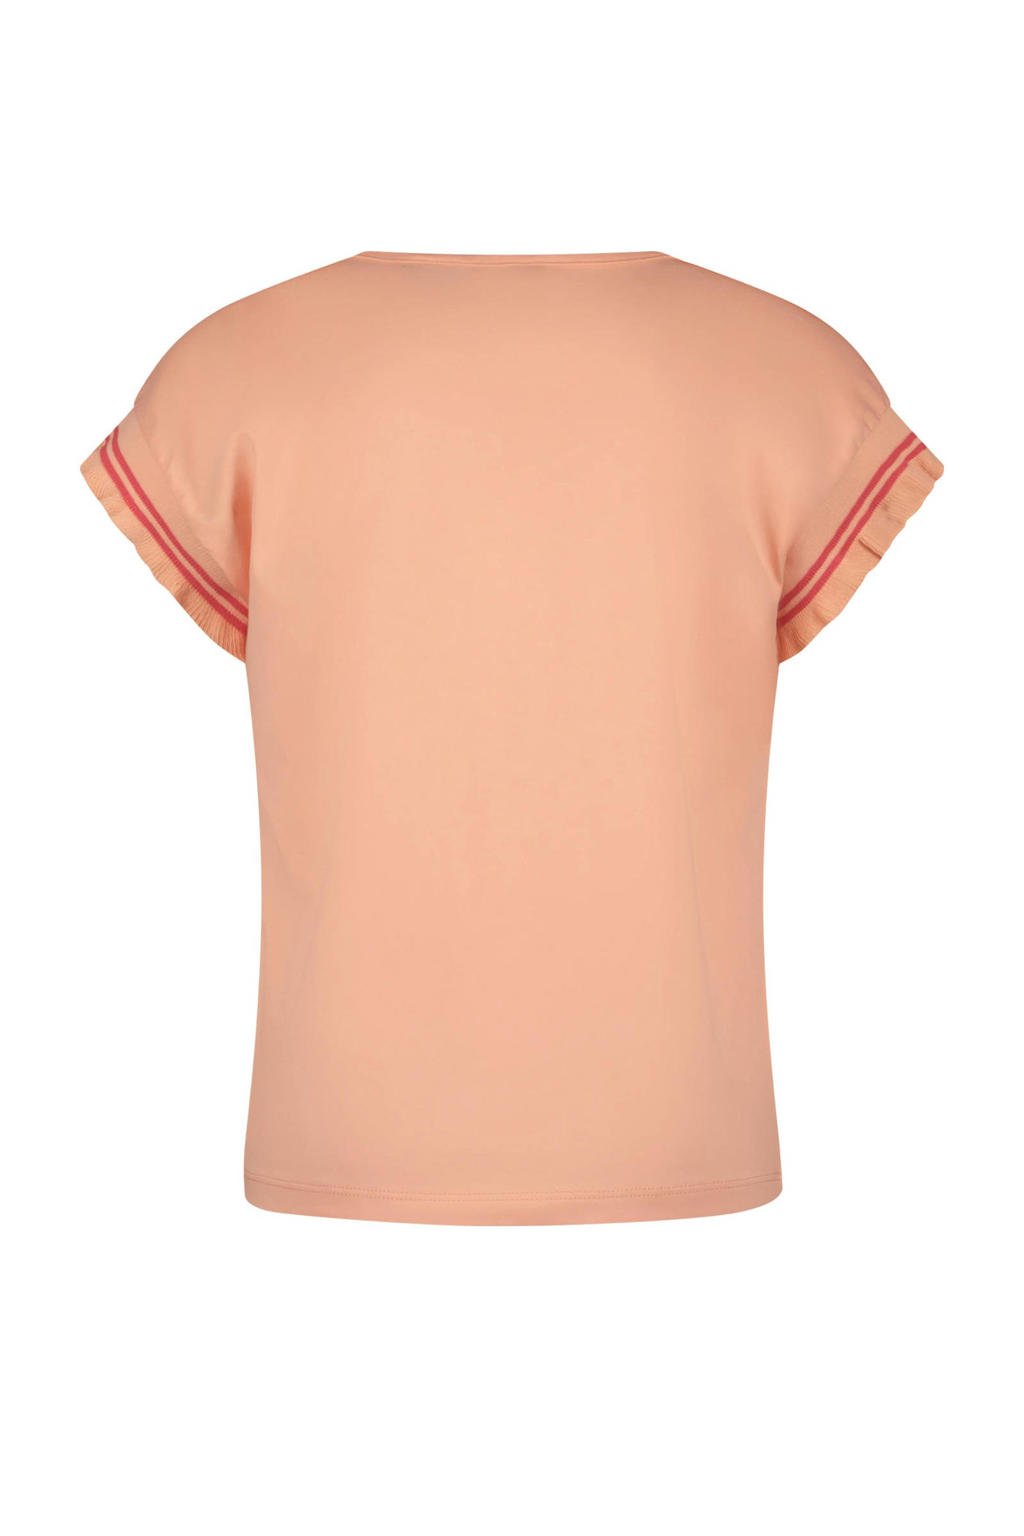 Oranje meisjes NONO T-shirt Kanai van stretchkatoen met printopdruk, korte mouwen en ronde hals